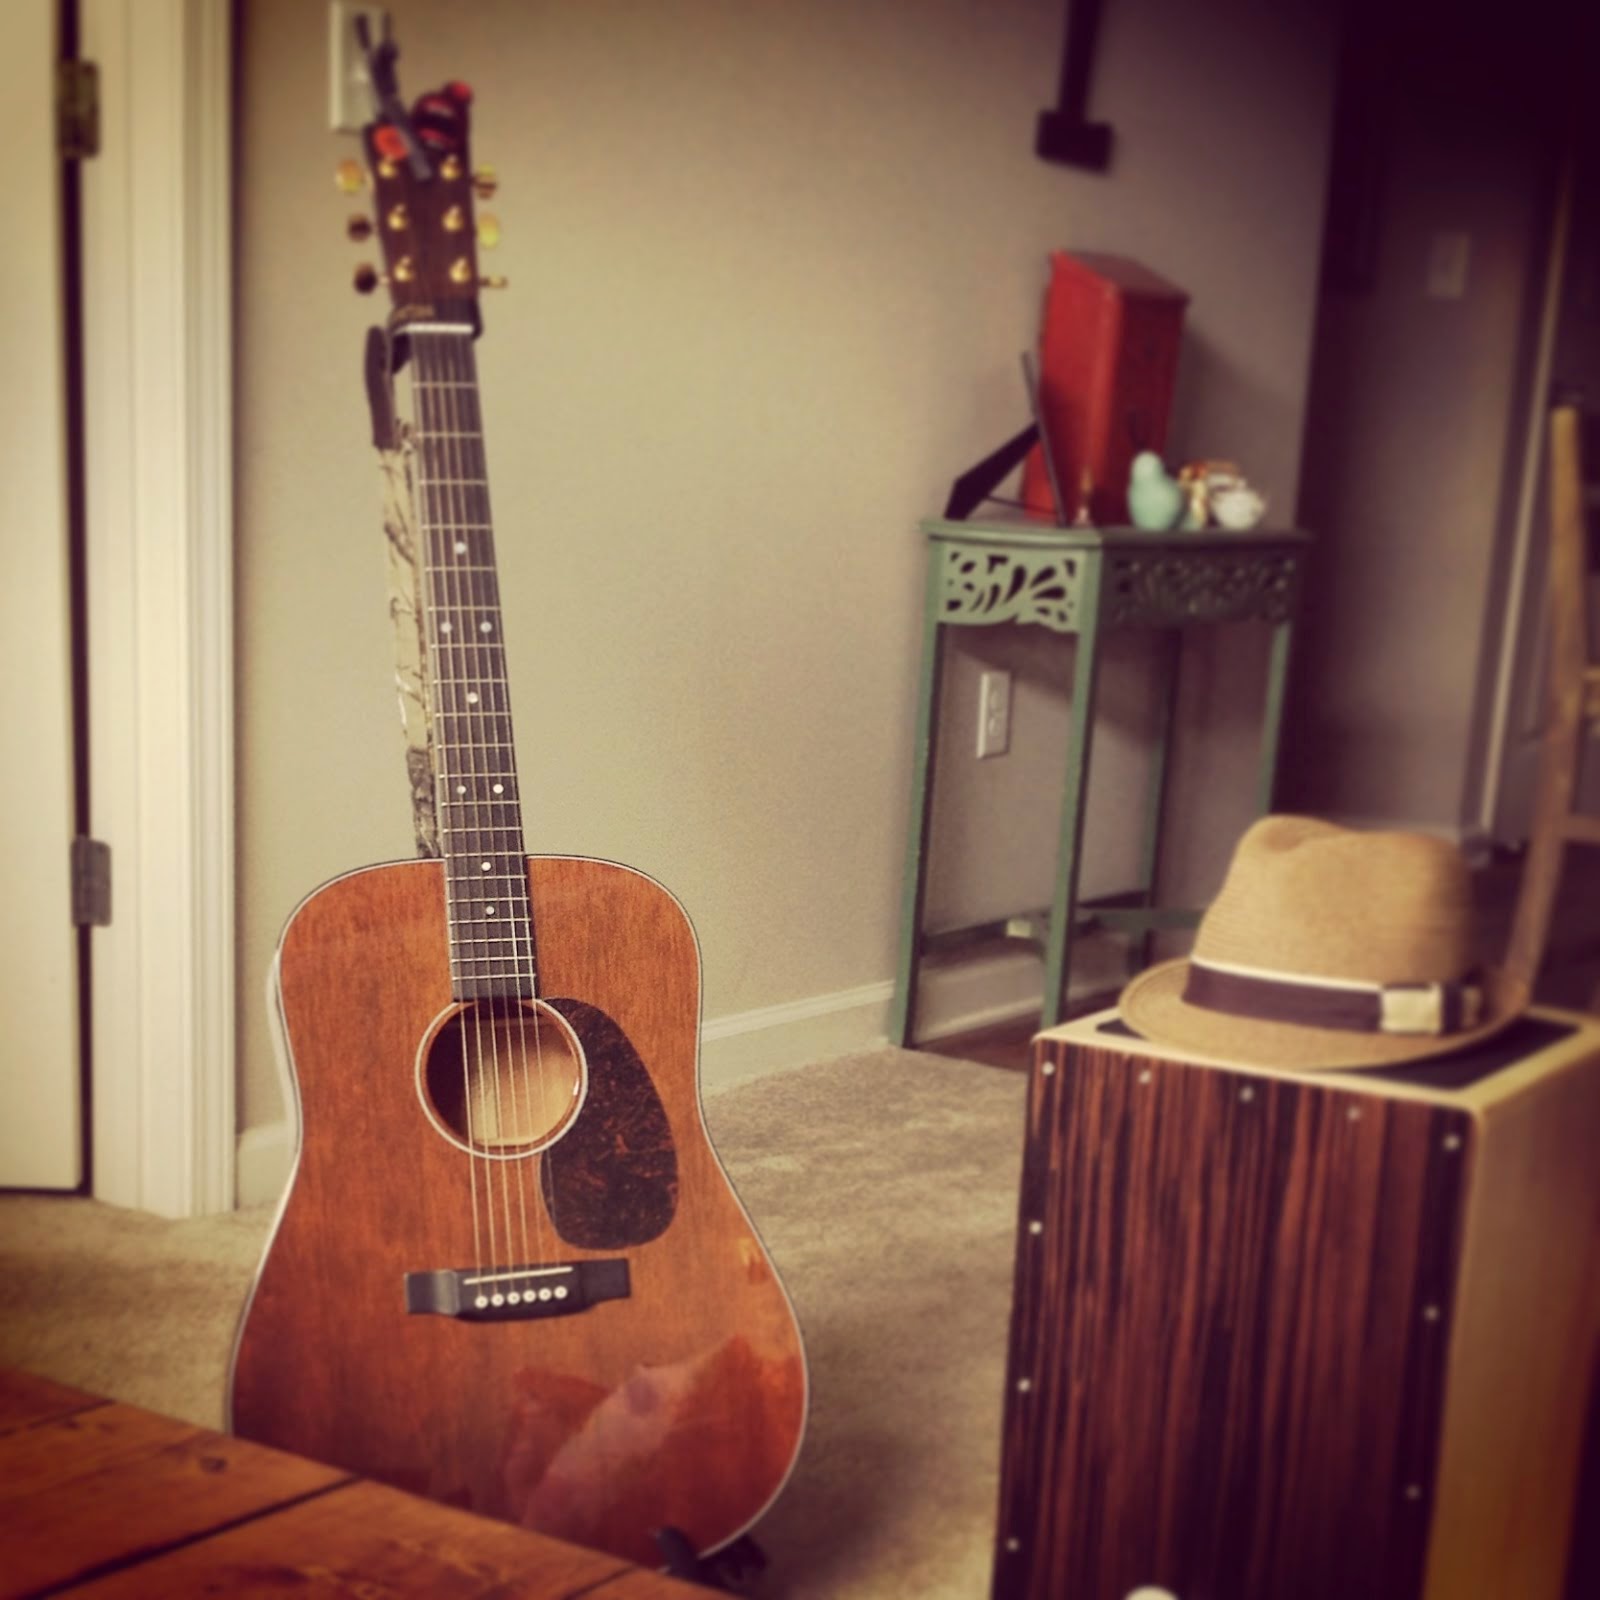 My at home acoustic setup